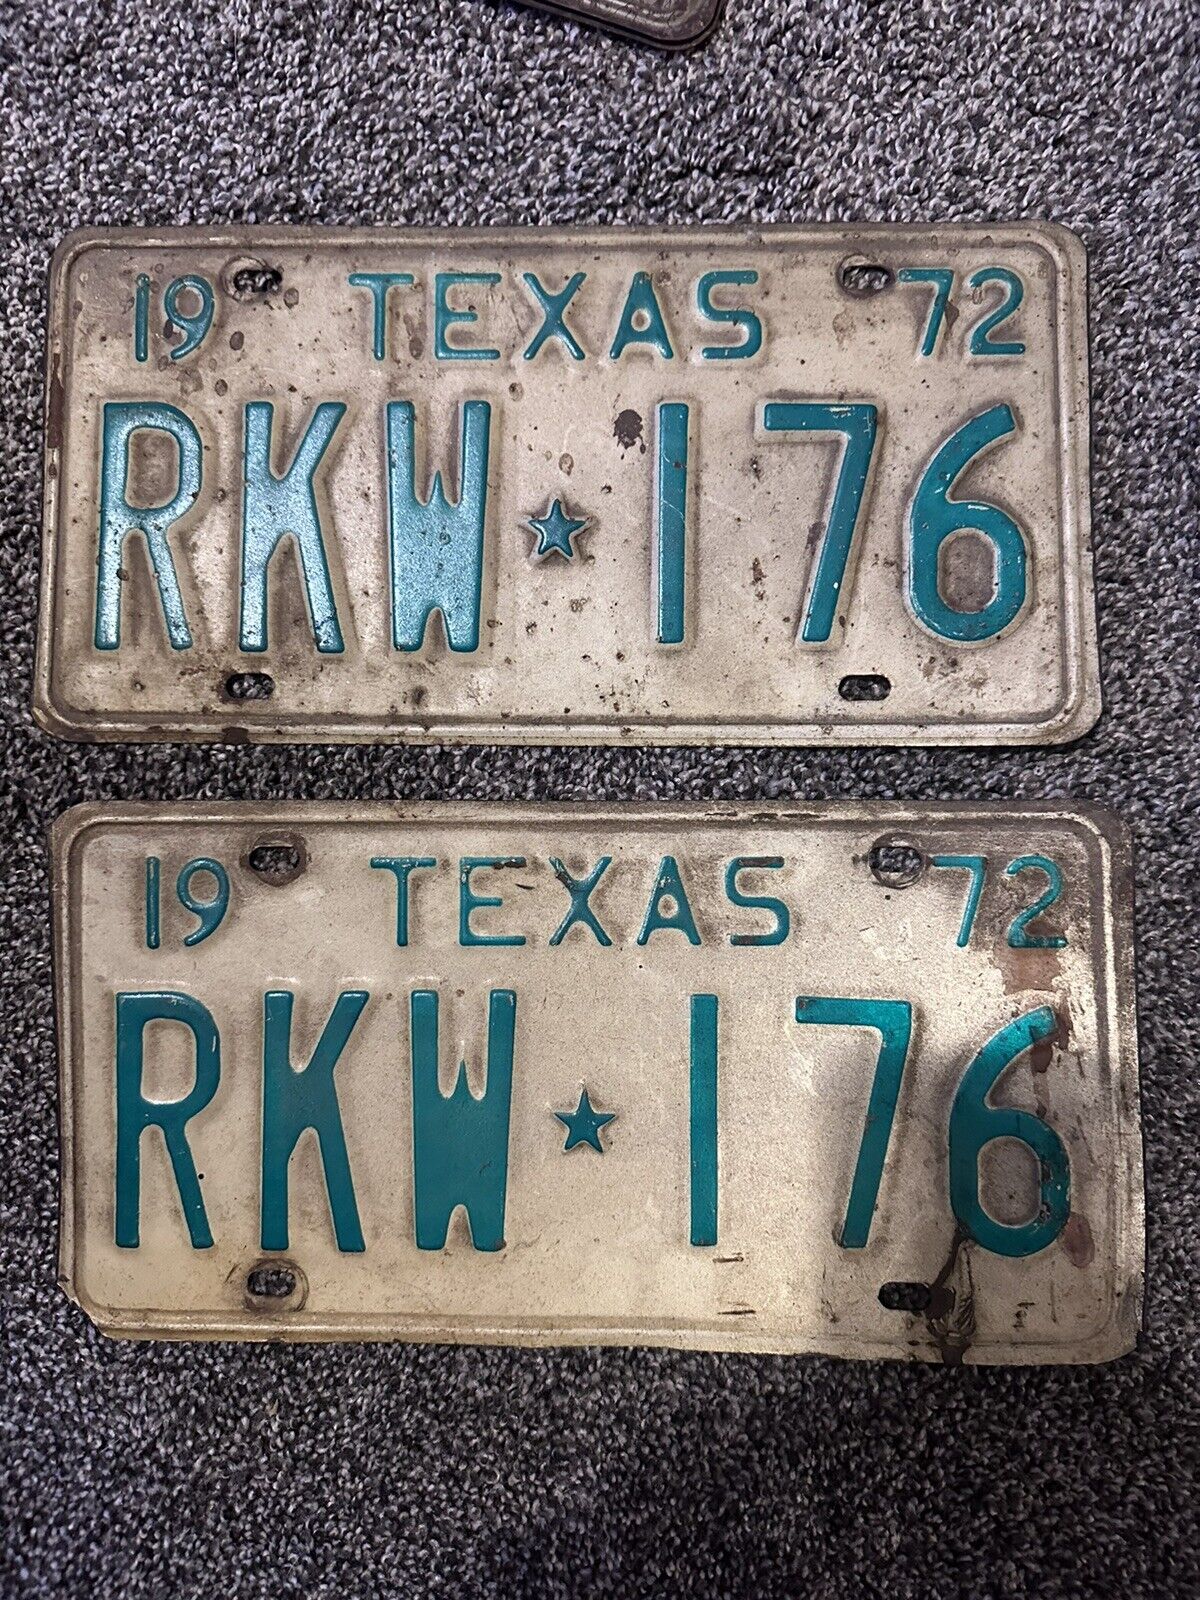 Vintage Texas 1972 Pair License Plates RKW176